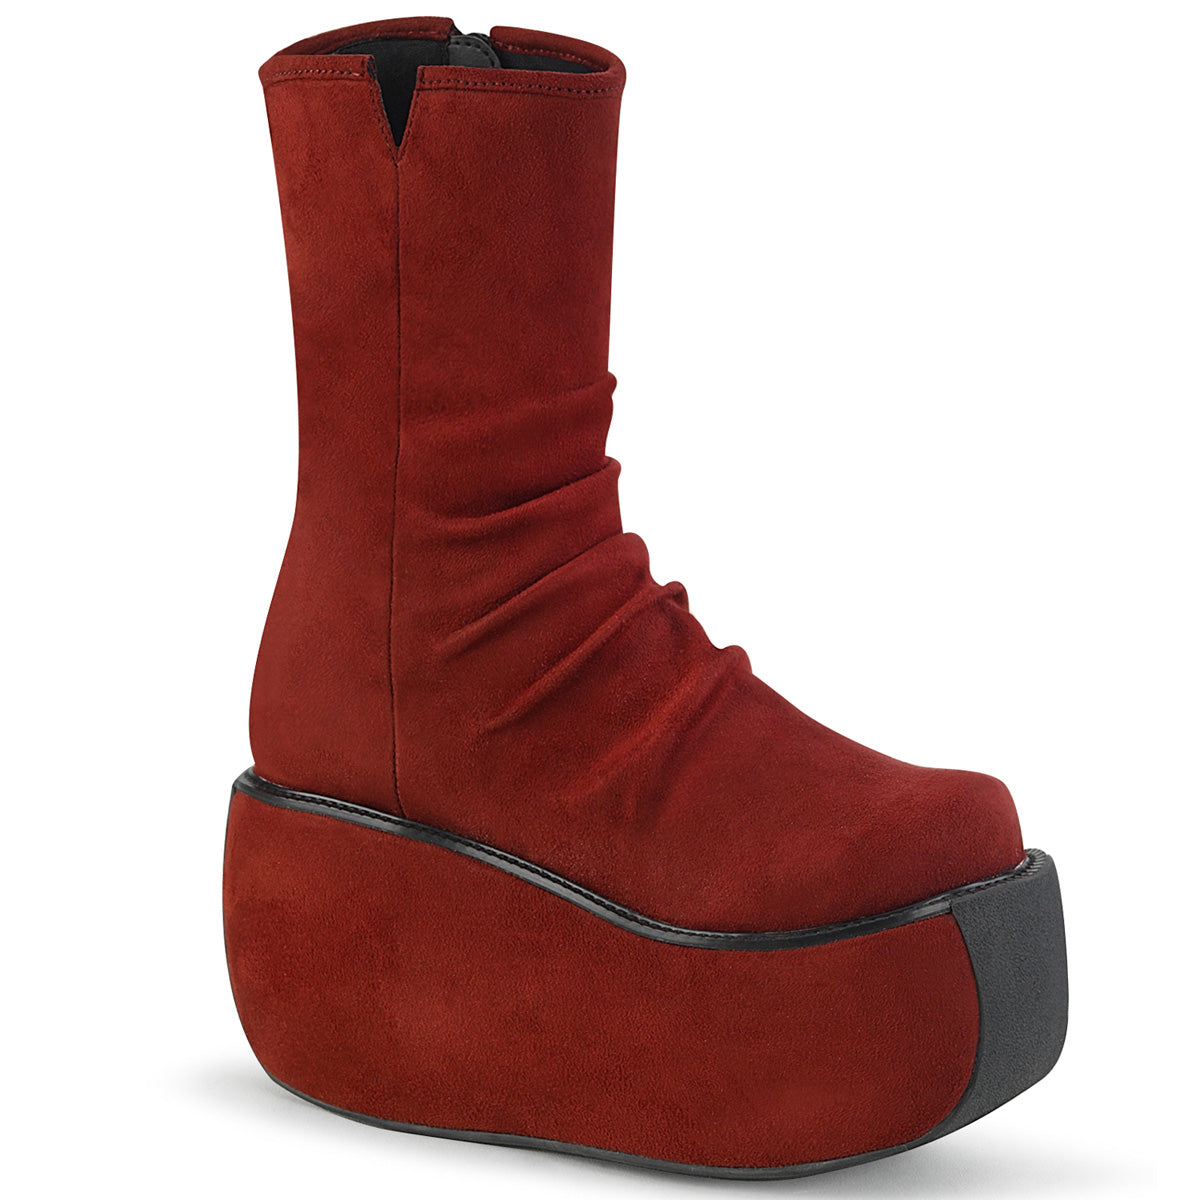 VIOLET-100 Alternative Footwear Demonia Women's Ankle Boots Burgundy Faux Suede